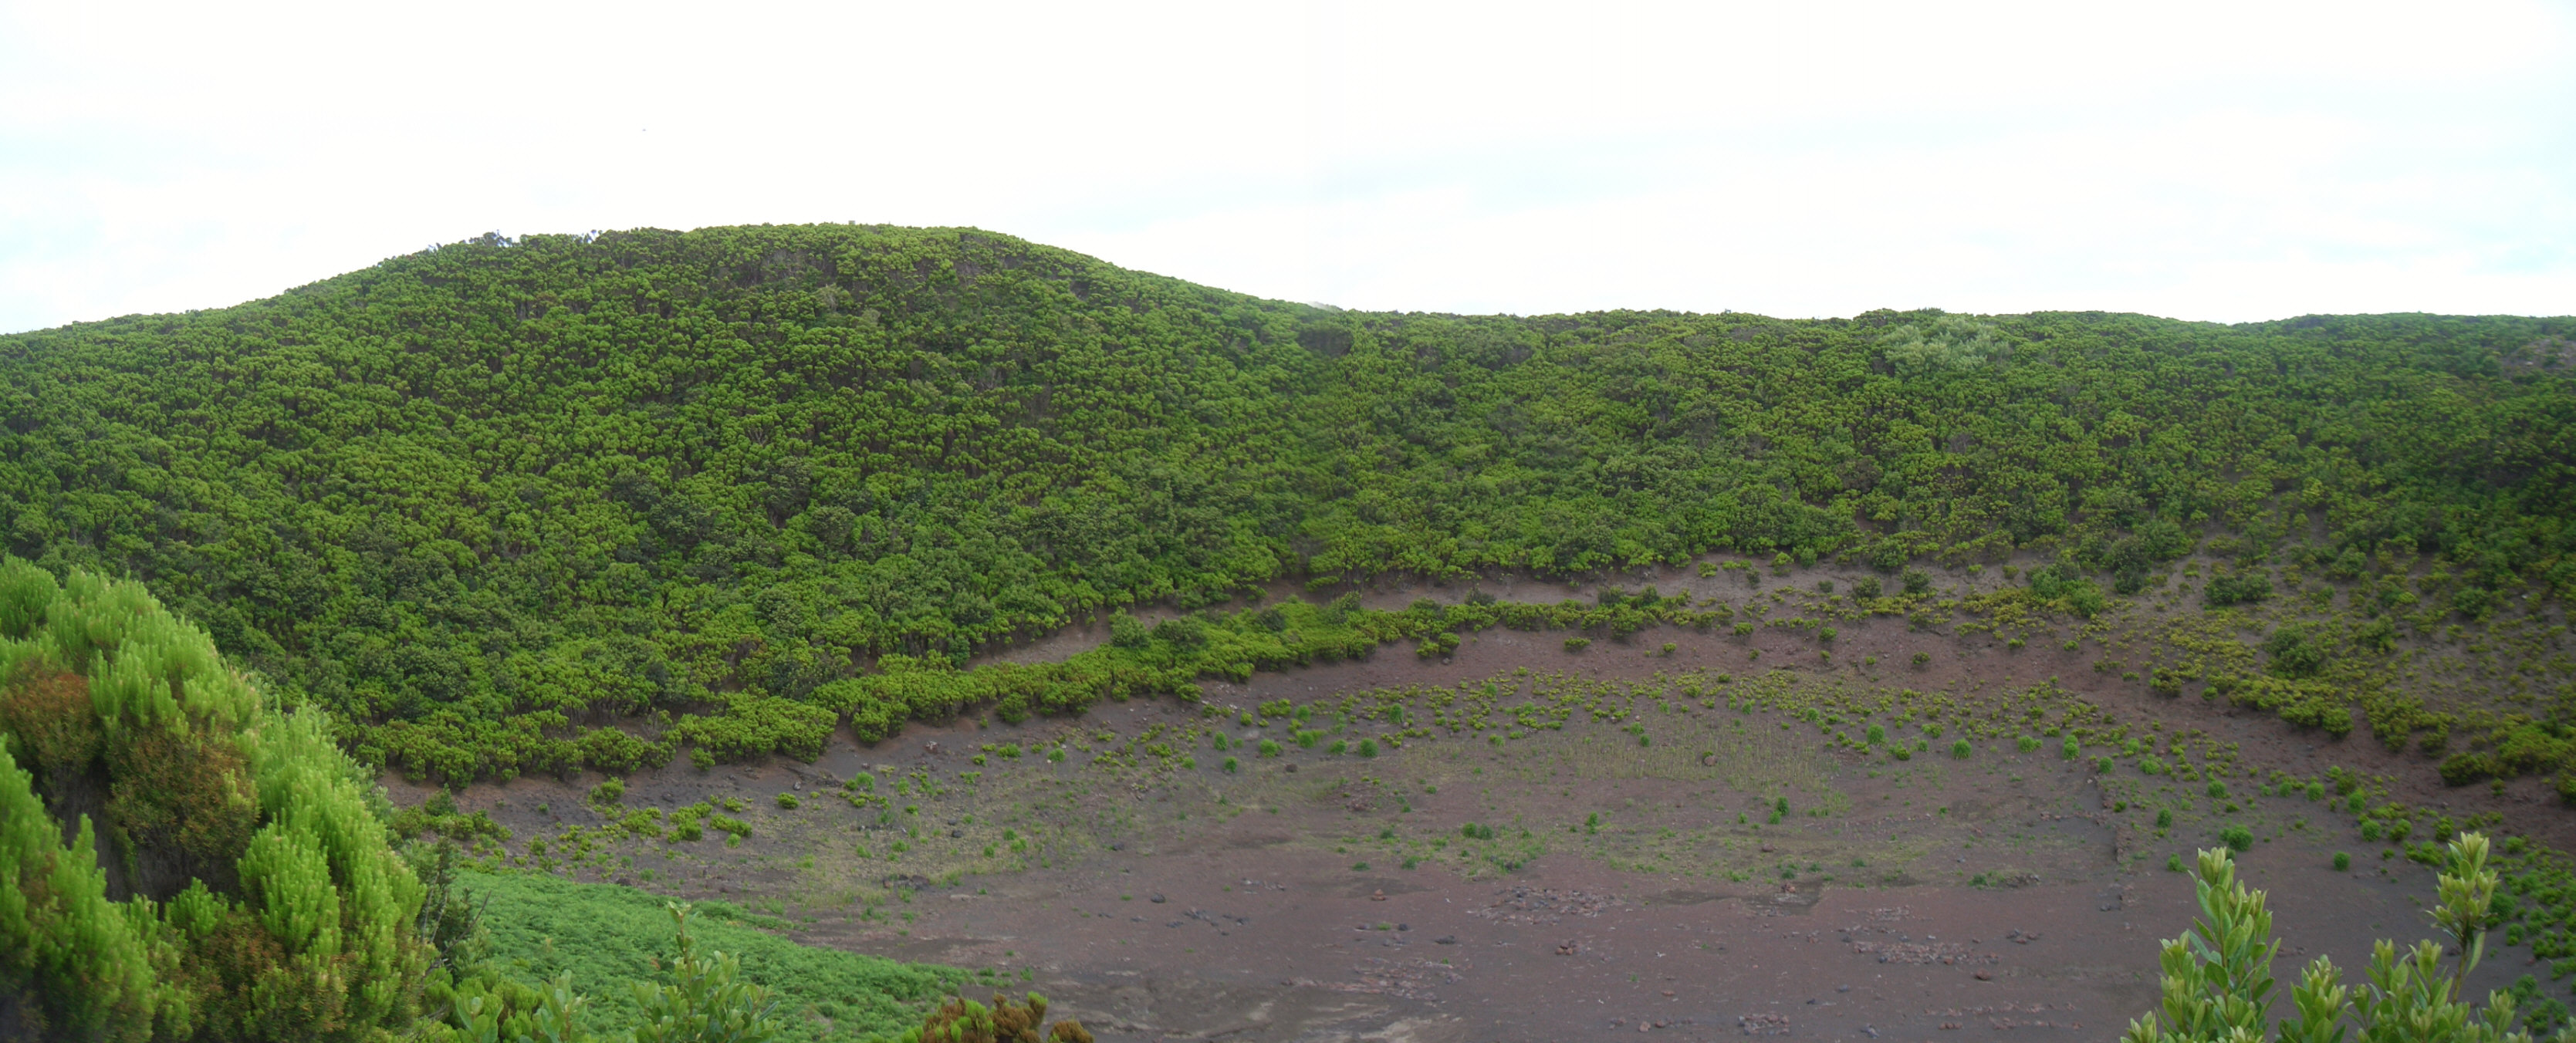 CIMG3316bis3317.JPG - Cabeco do Canto: Blick vom Kraterrand in den Kessel (Panorama).